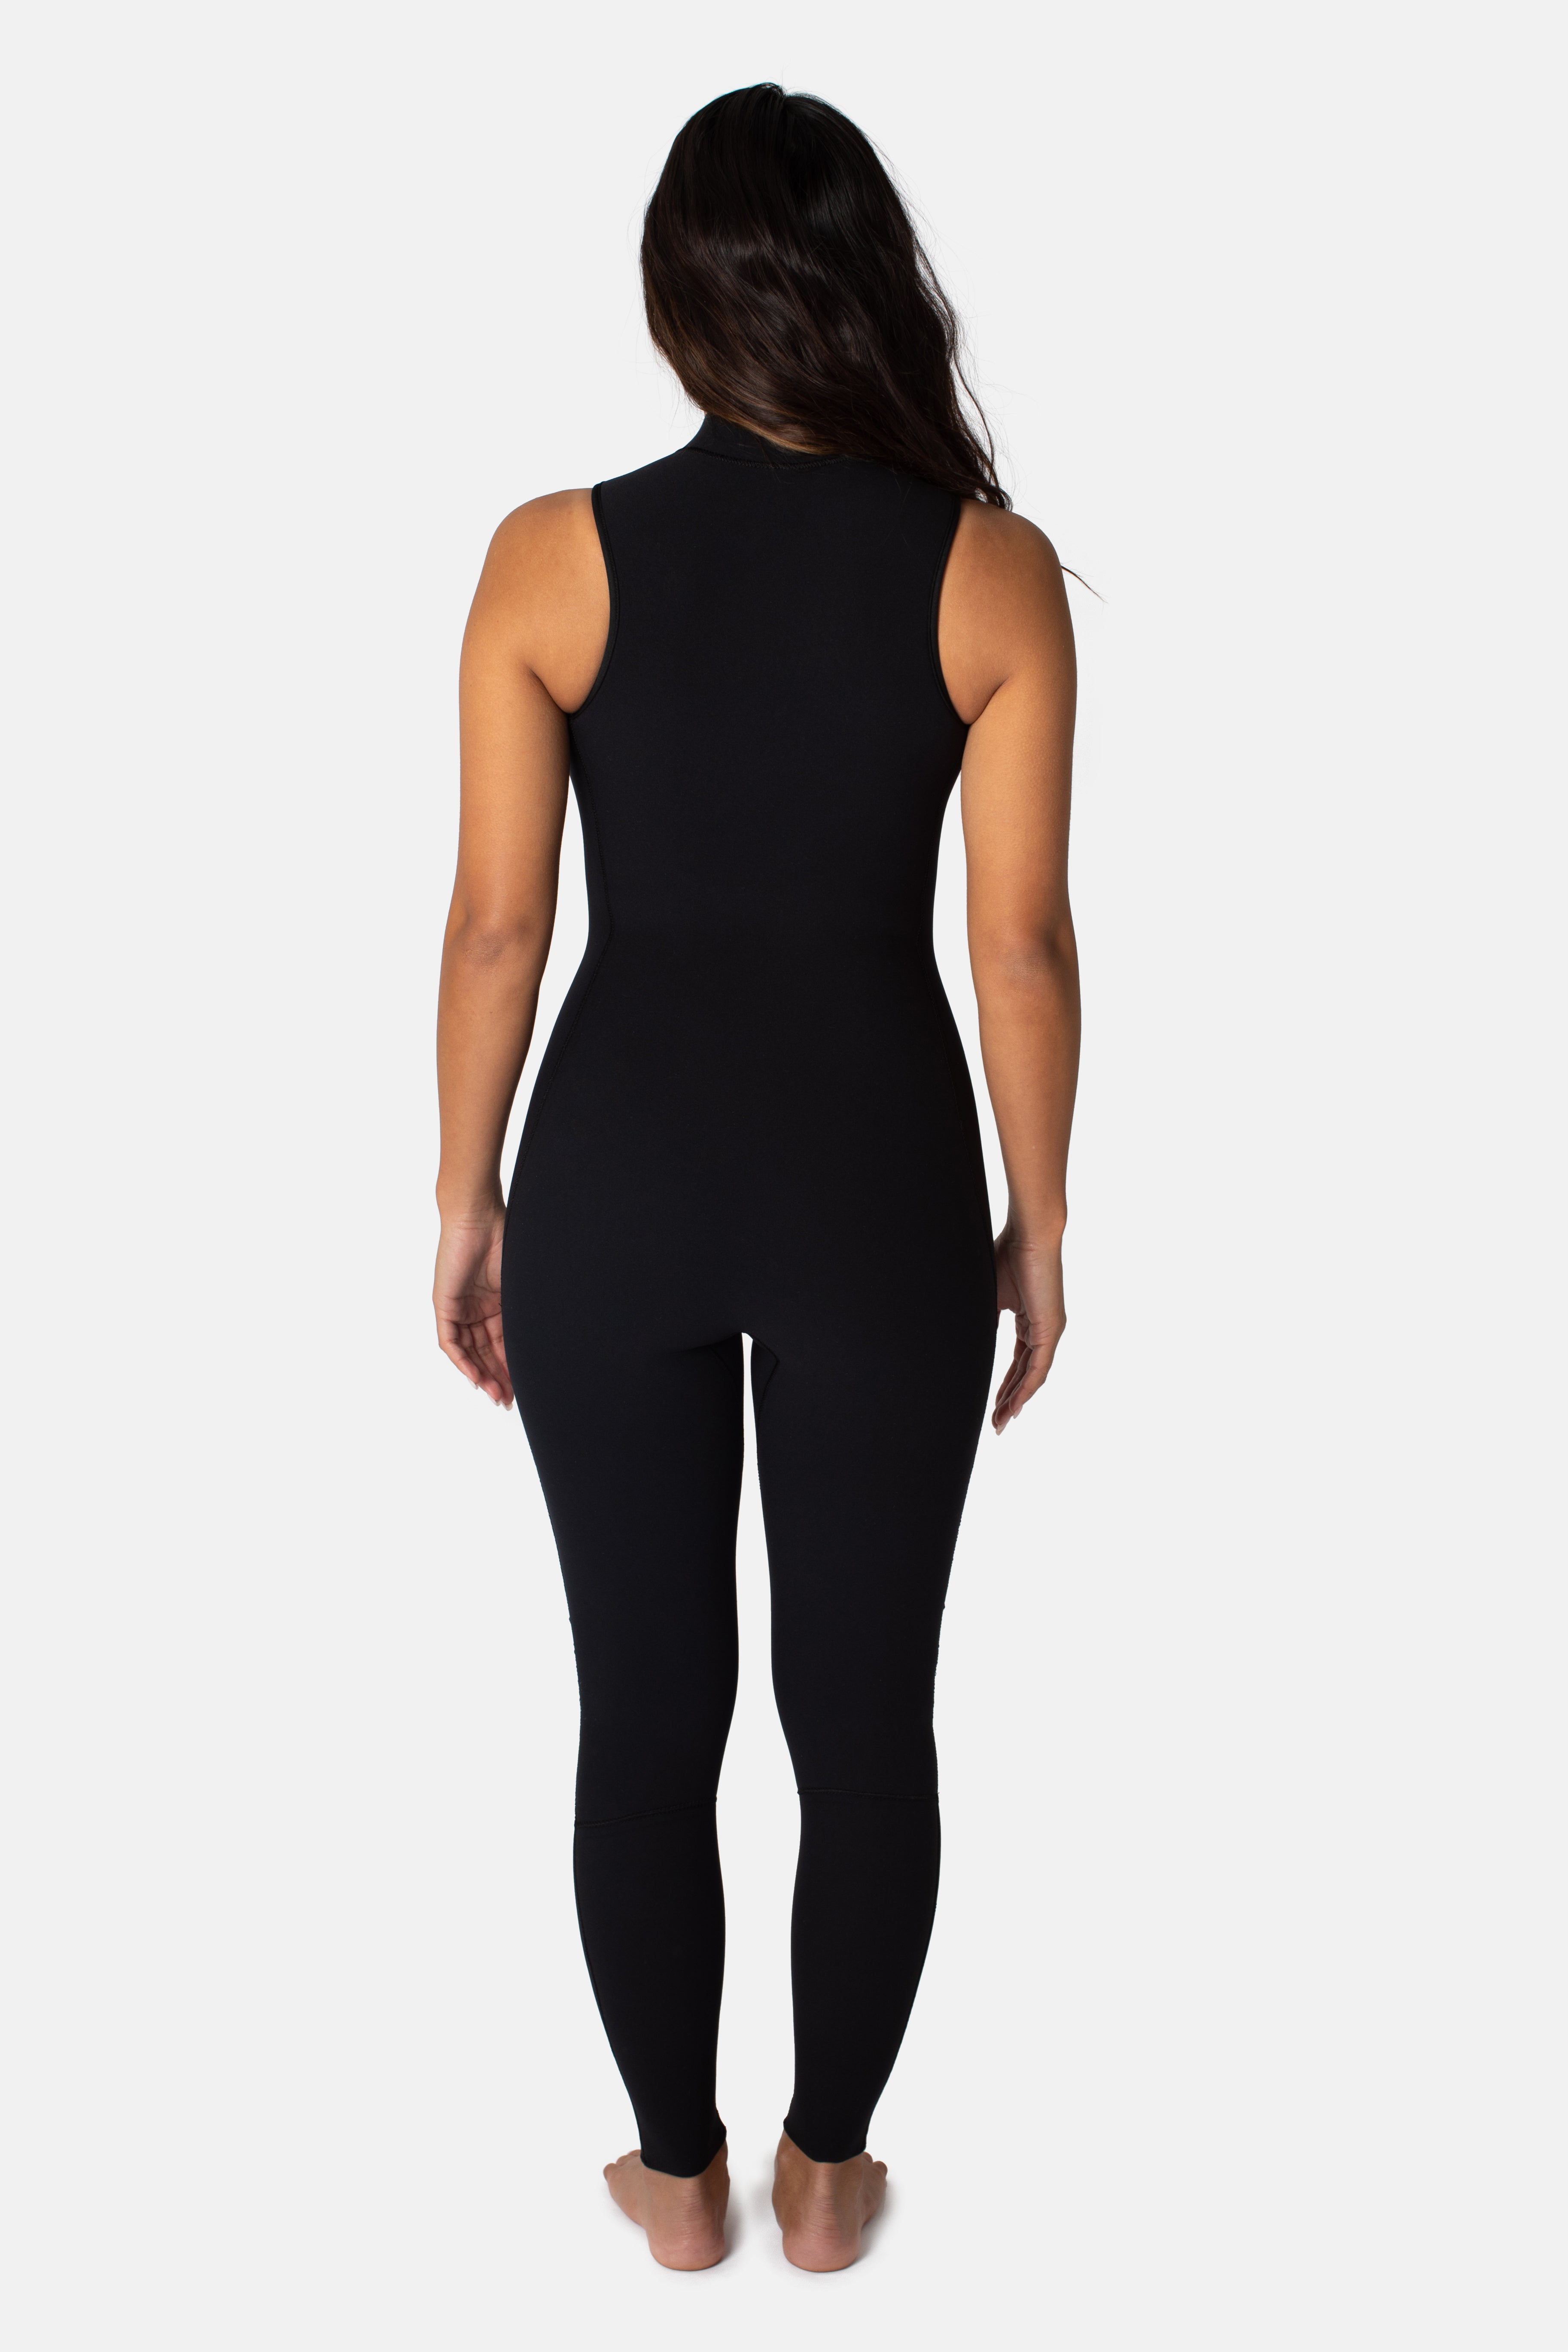 Women's Custom Measured Signature Fullsuit Wetsuit – Jonesea Wetsuits